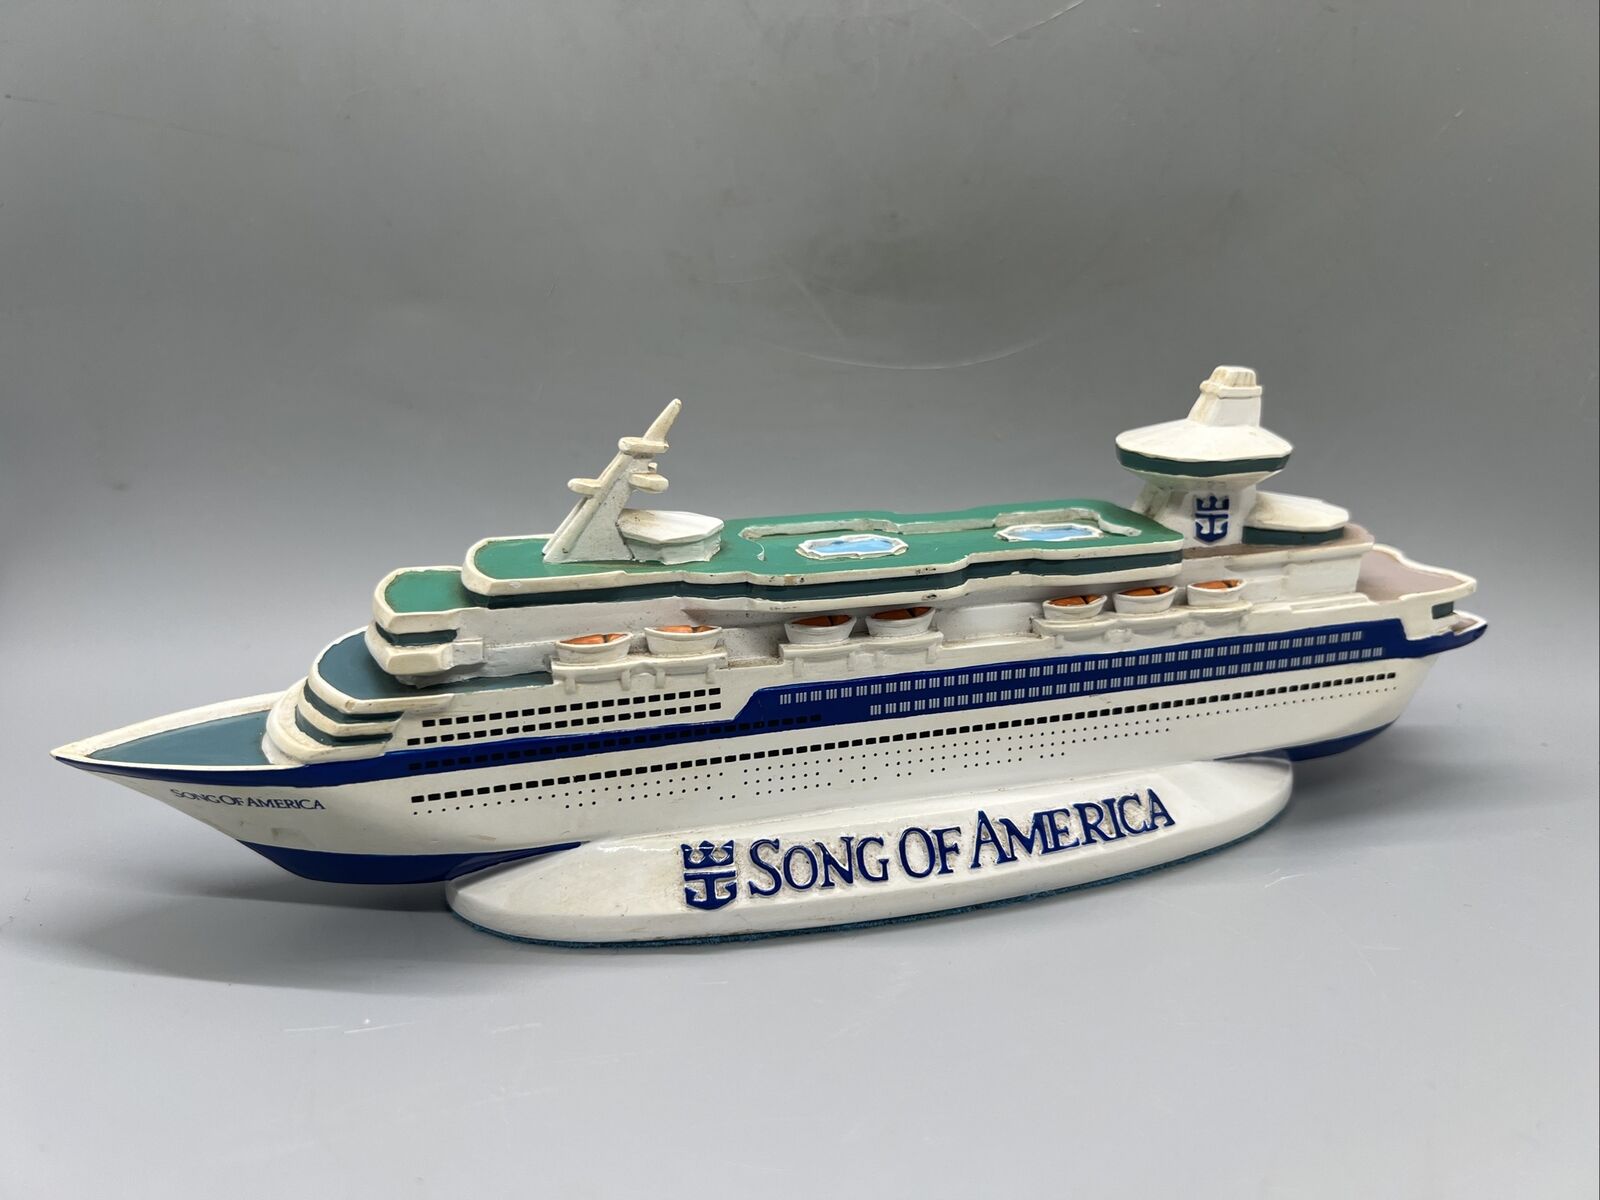 Royal Caribbean SONG OF AMERICA Cruise Ship Model RARE 9.75”